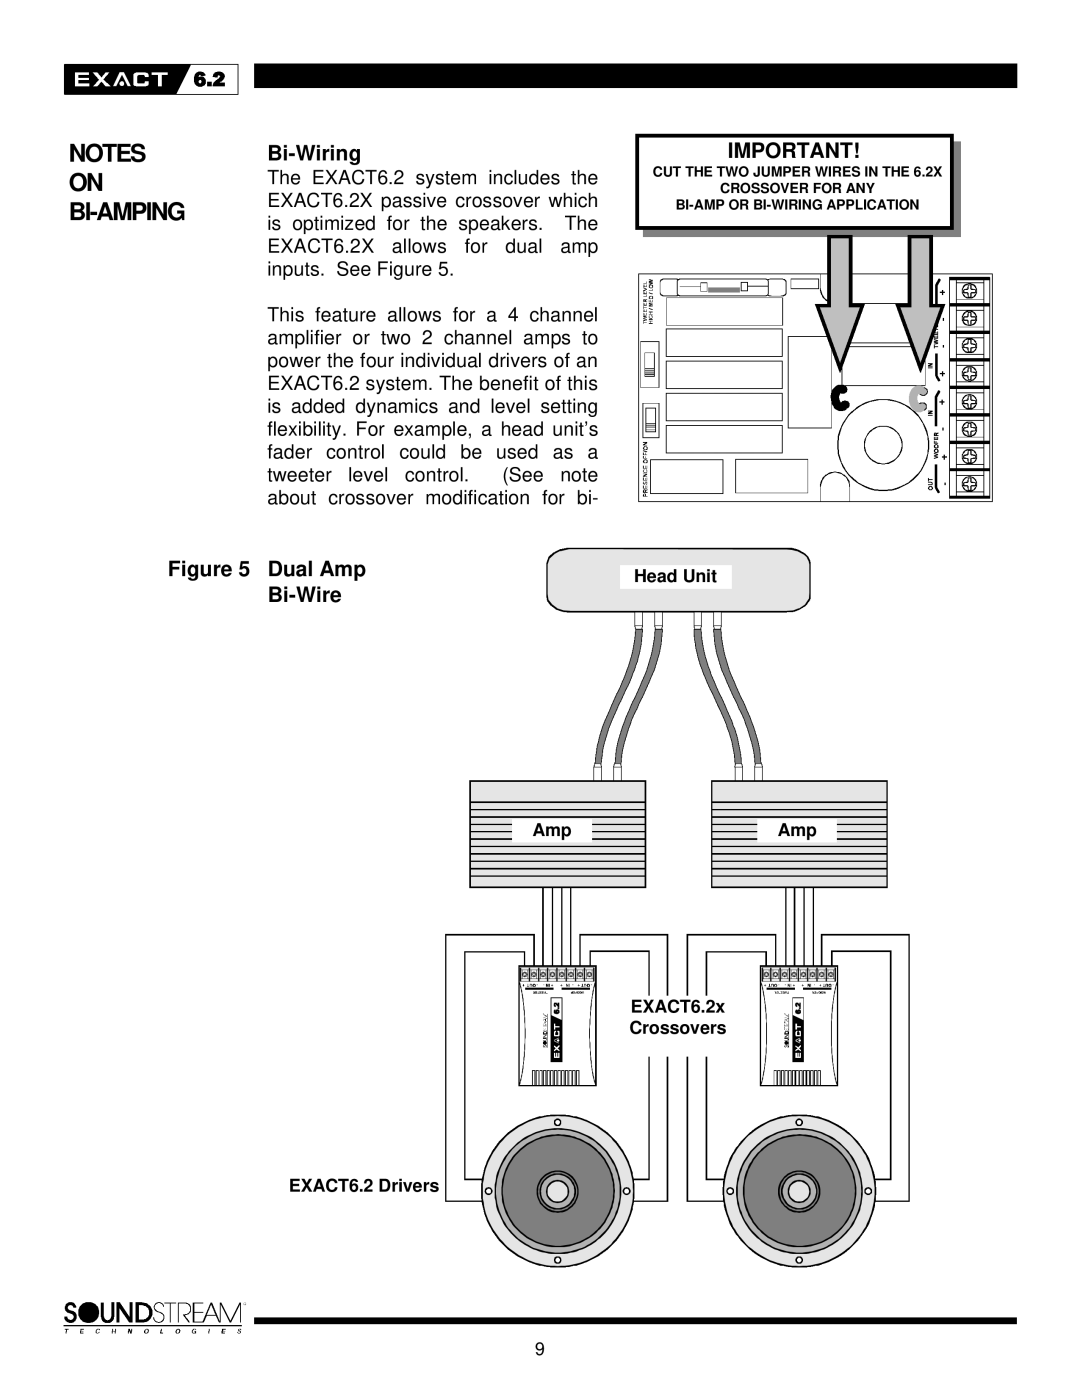 Soundstream Technologies Exact 6.2 owner manual Notes On Bi-Amping, Bi-Wiring, Dual Amp, Bi-Wire 